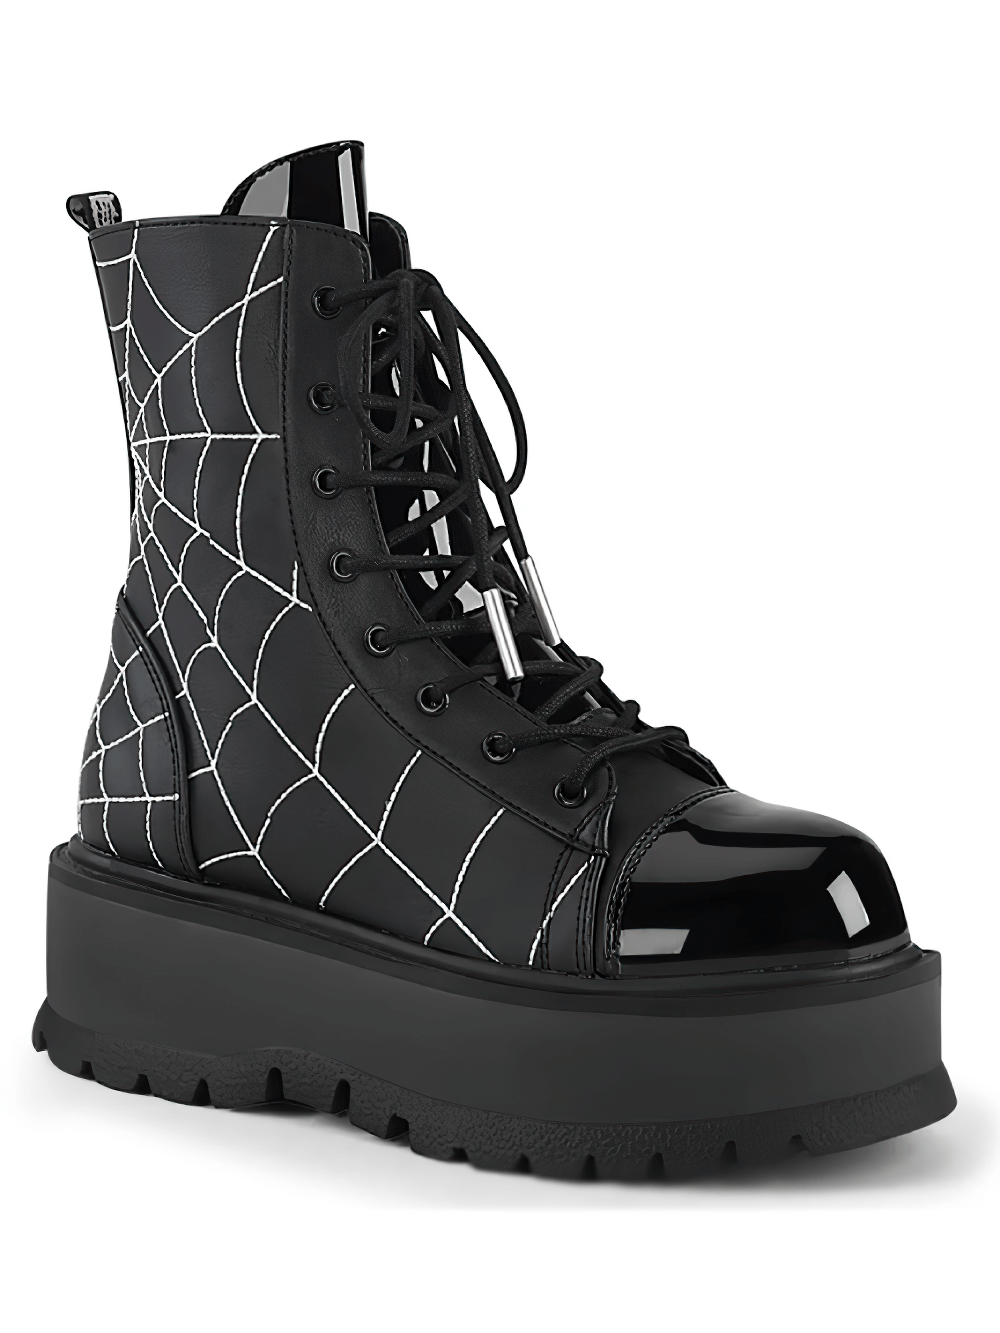 DEMONIA Platform Black Ankle Boots with Spider Web Design